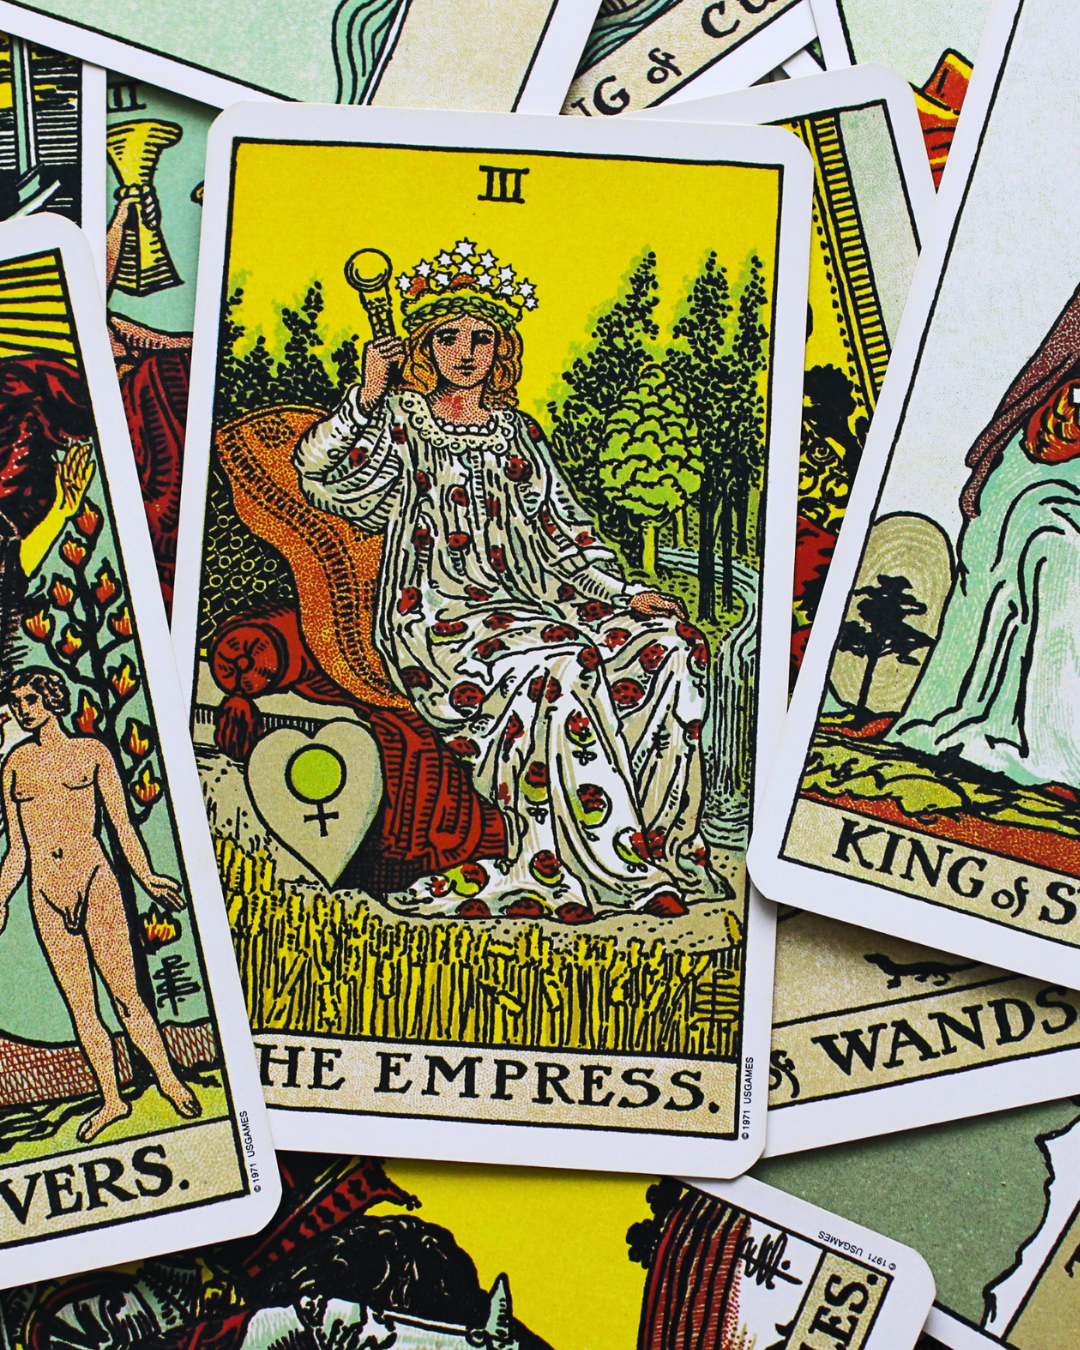 Tarot card deck with The Empress card on top (Rider Waite deck)